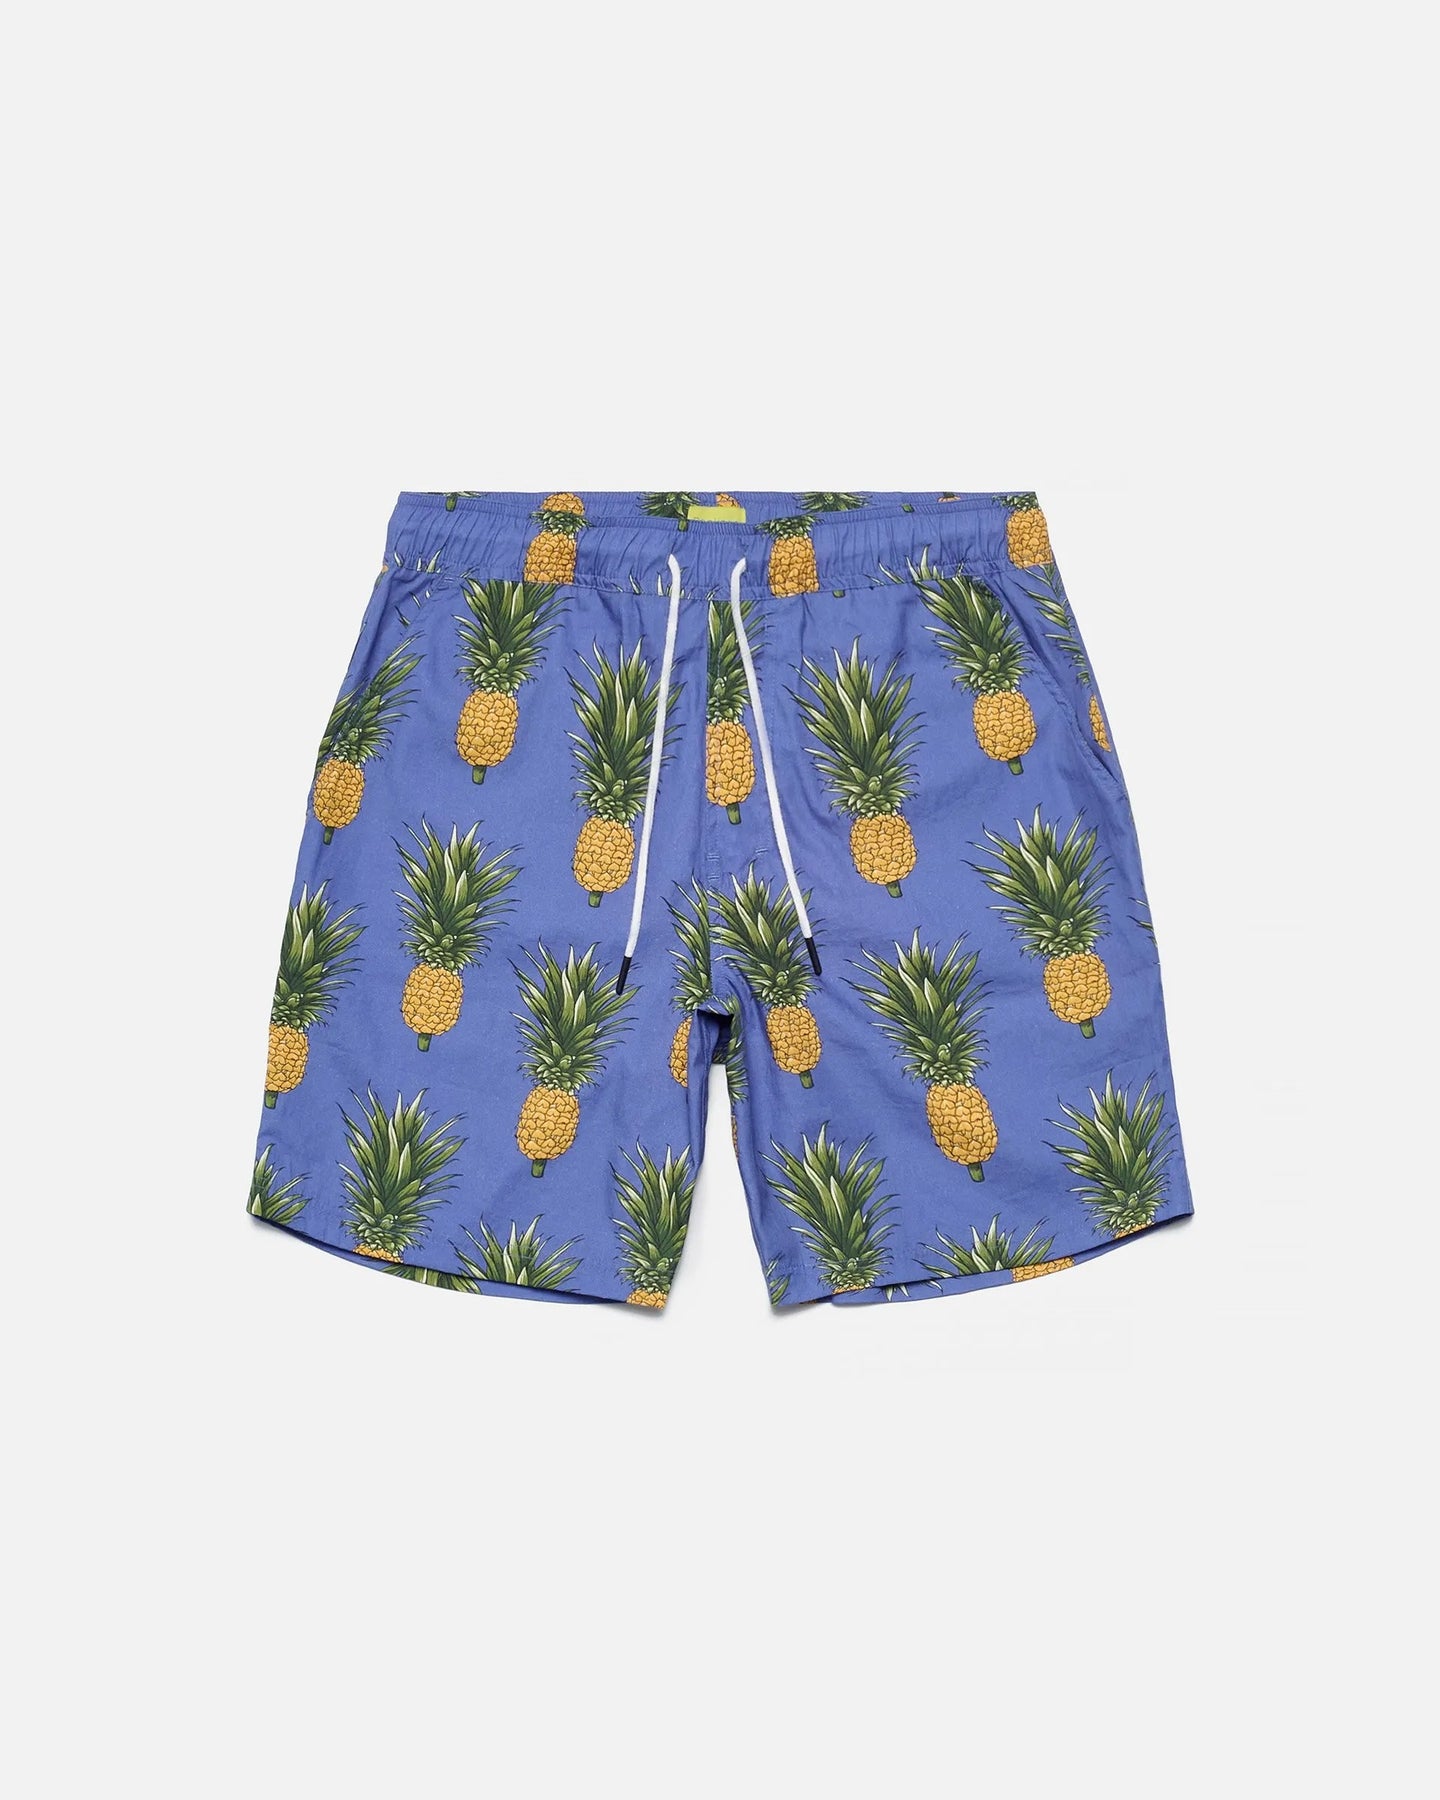 Poplin & Co Men's Shorts in Wild Pineapple